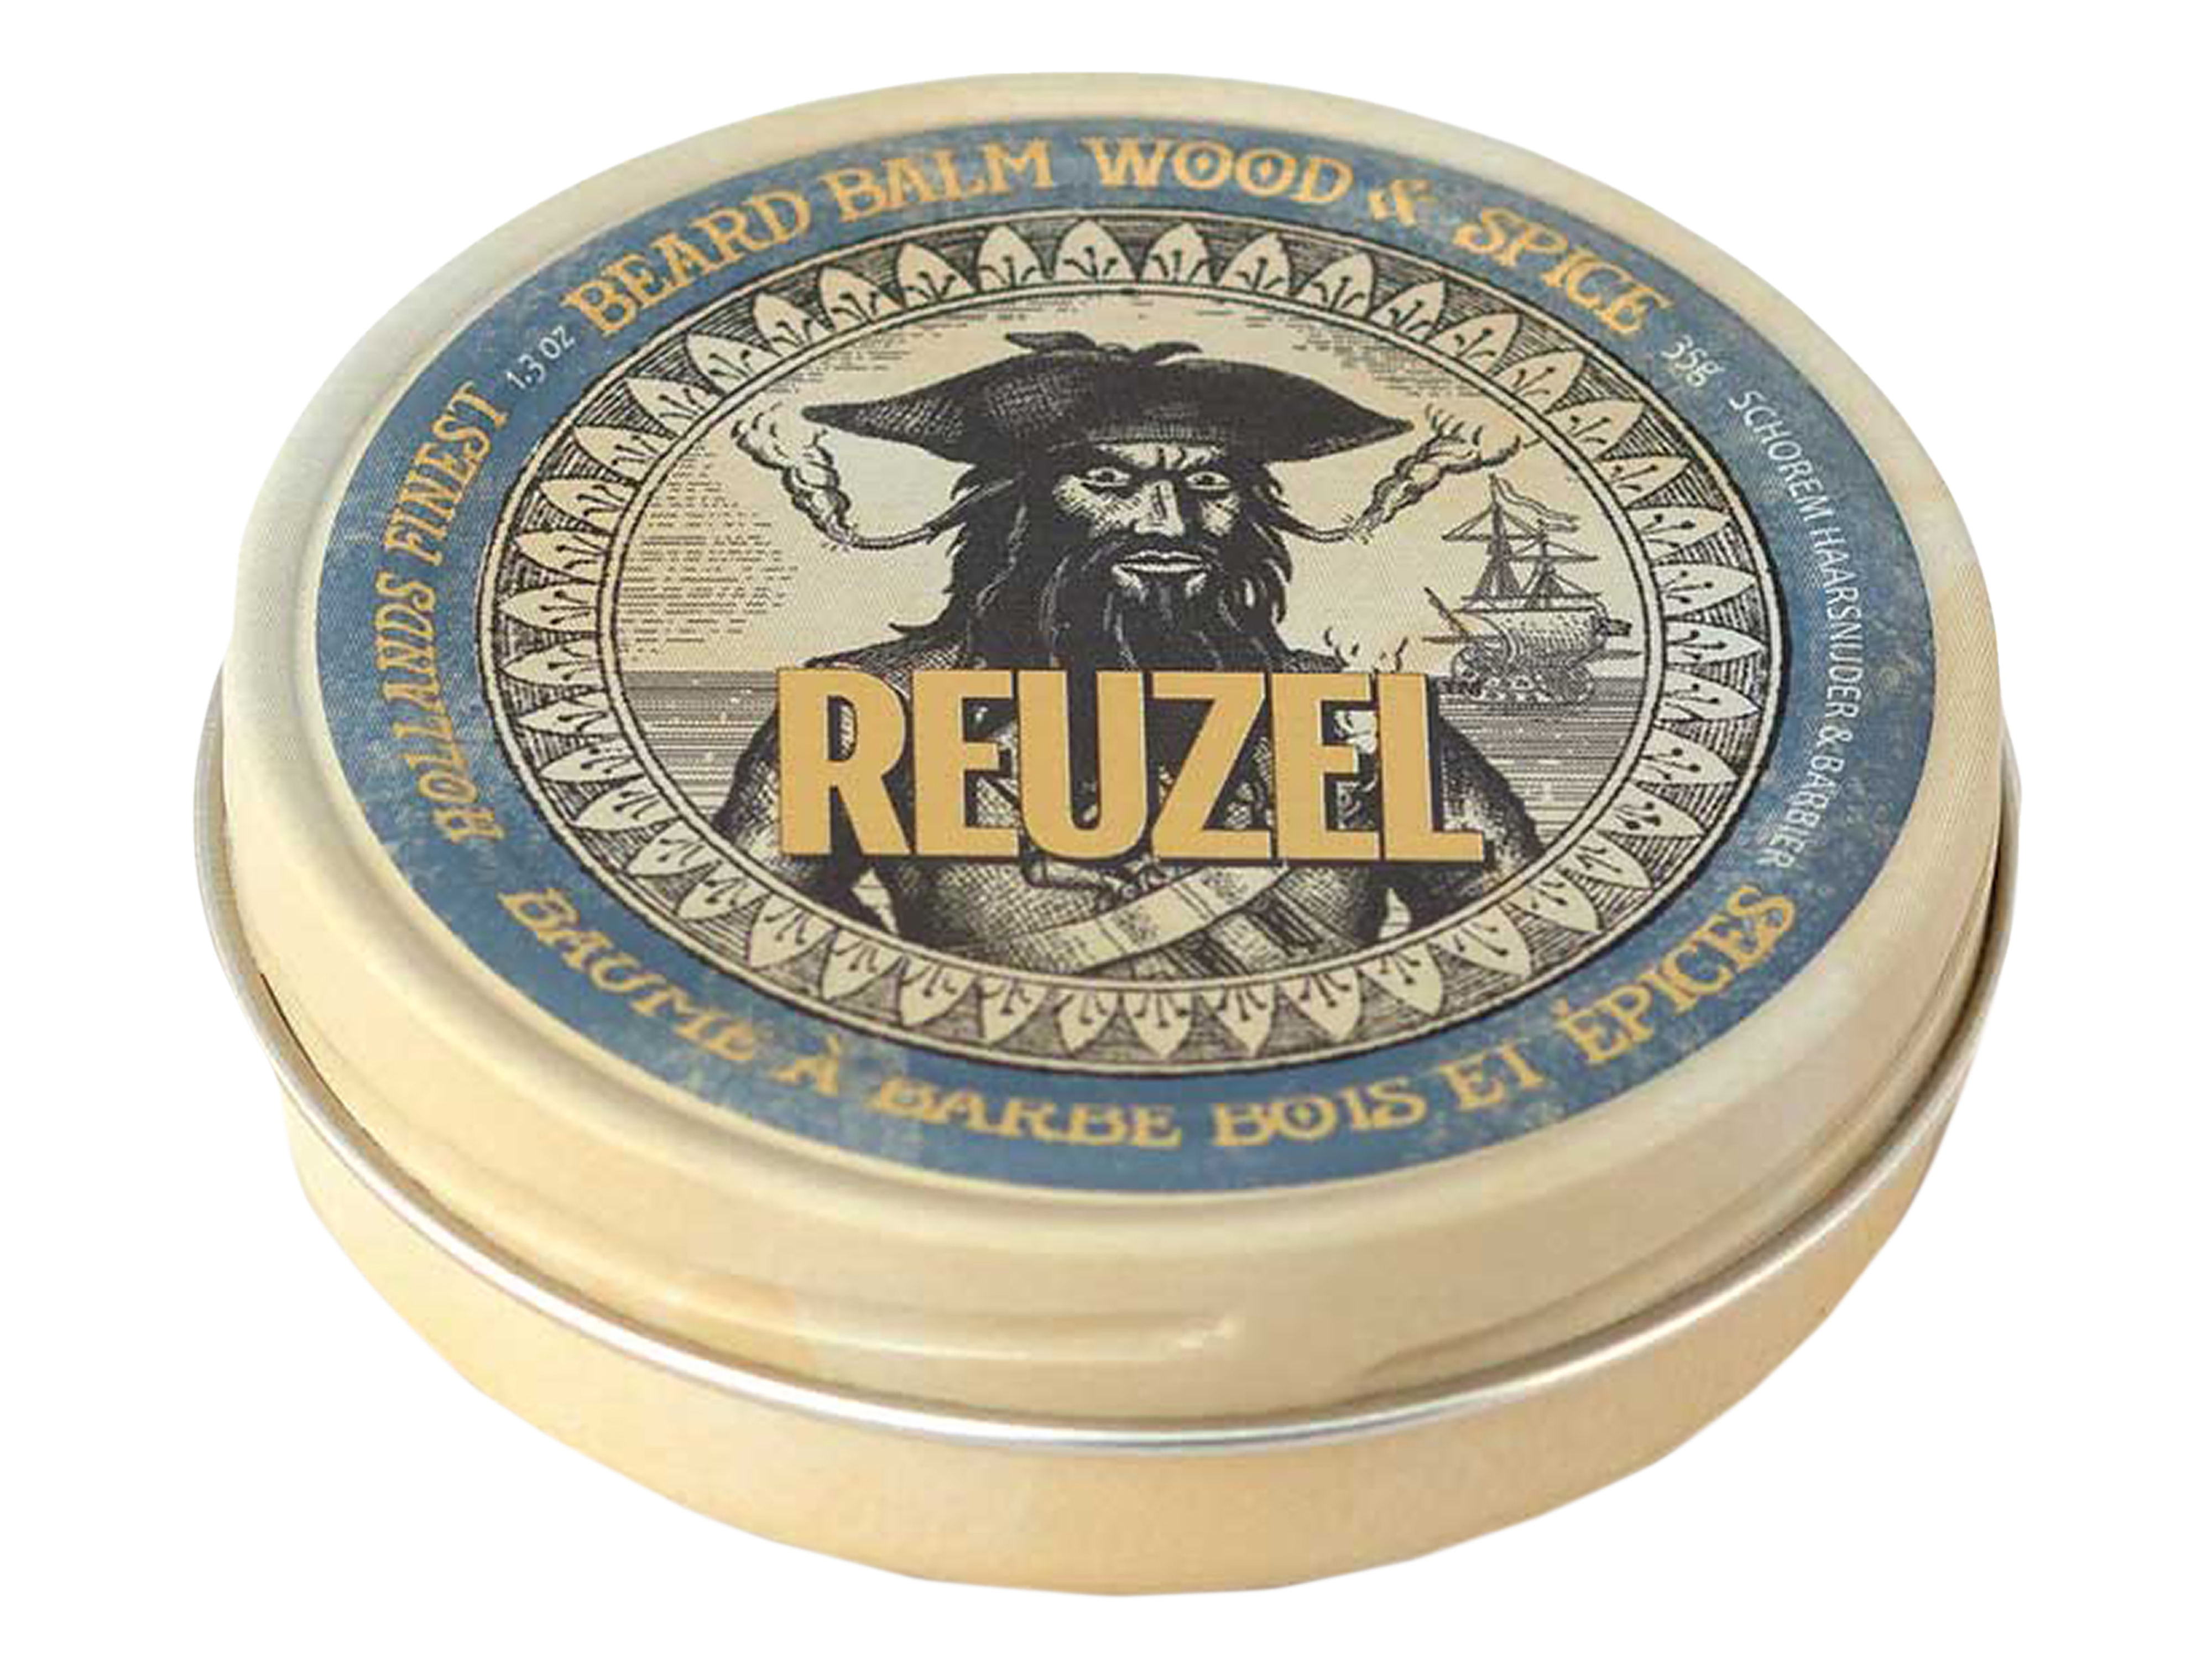 Reuzel Wood & Spice Beard Balm, 35